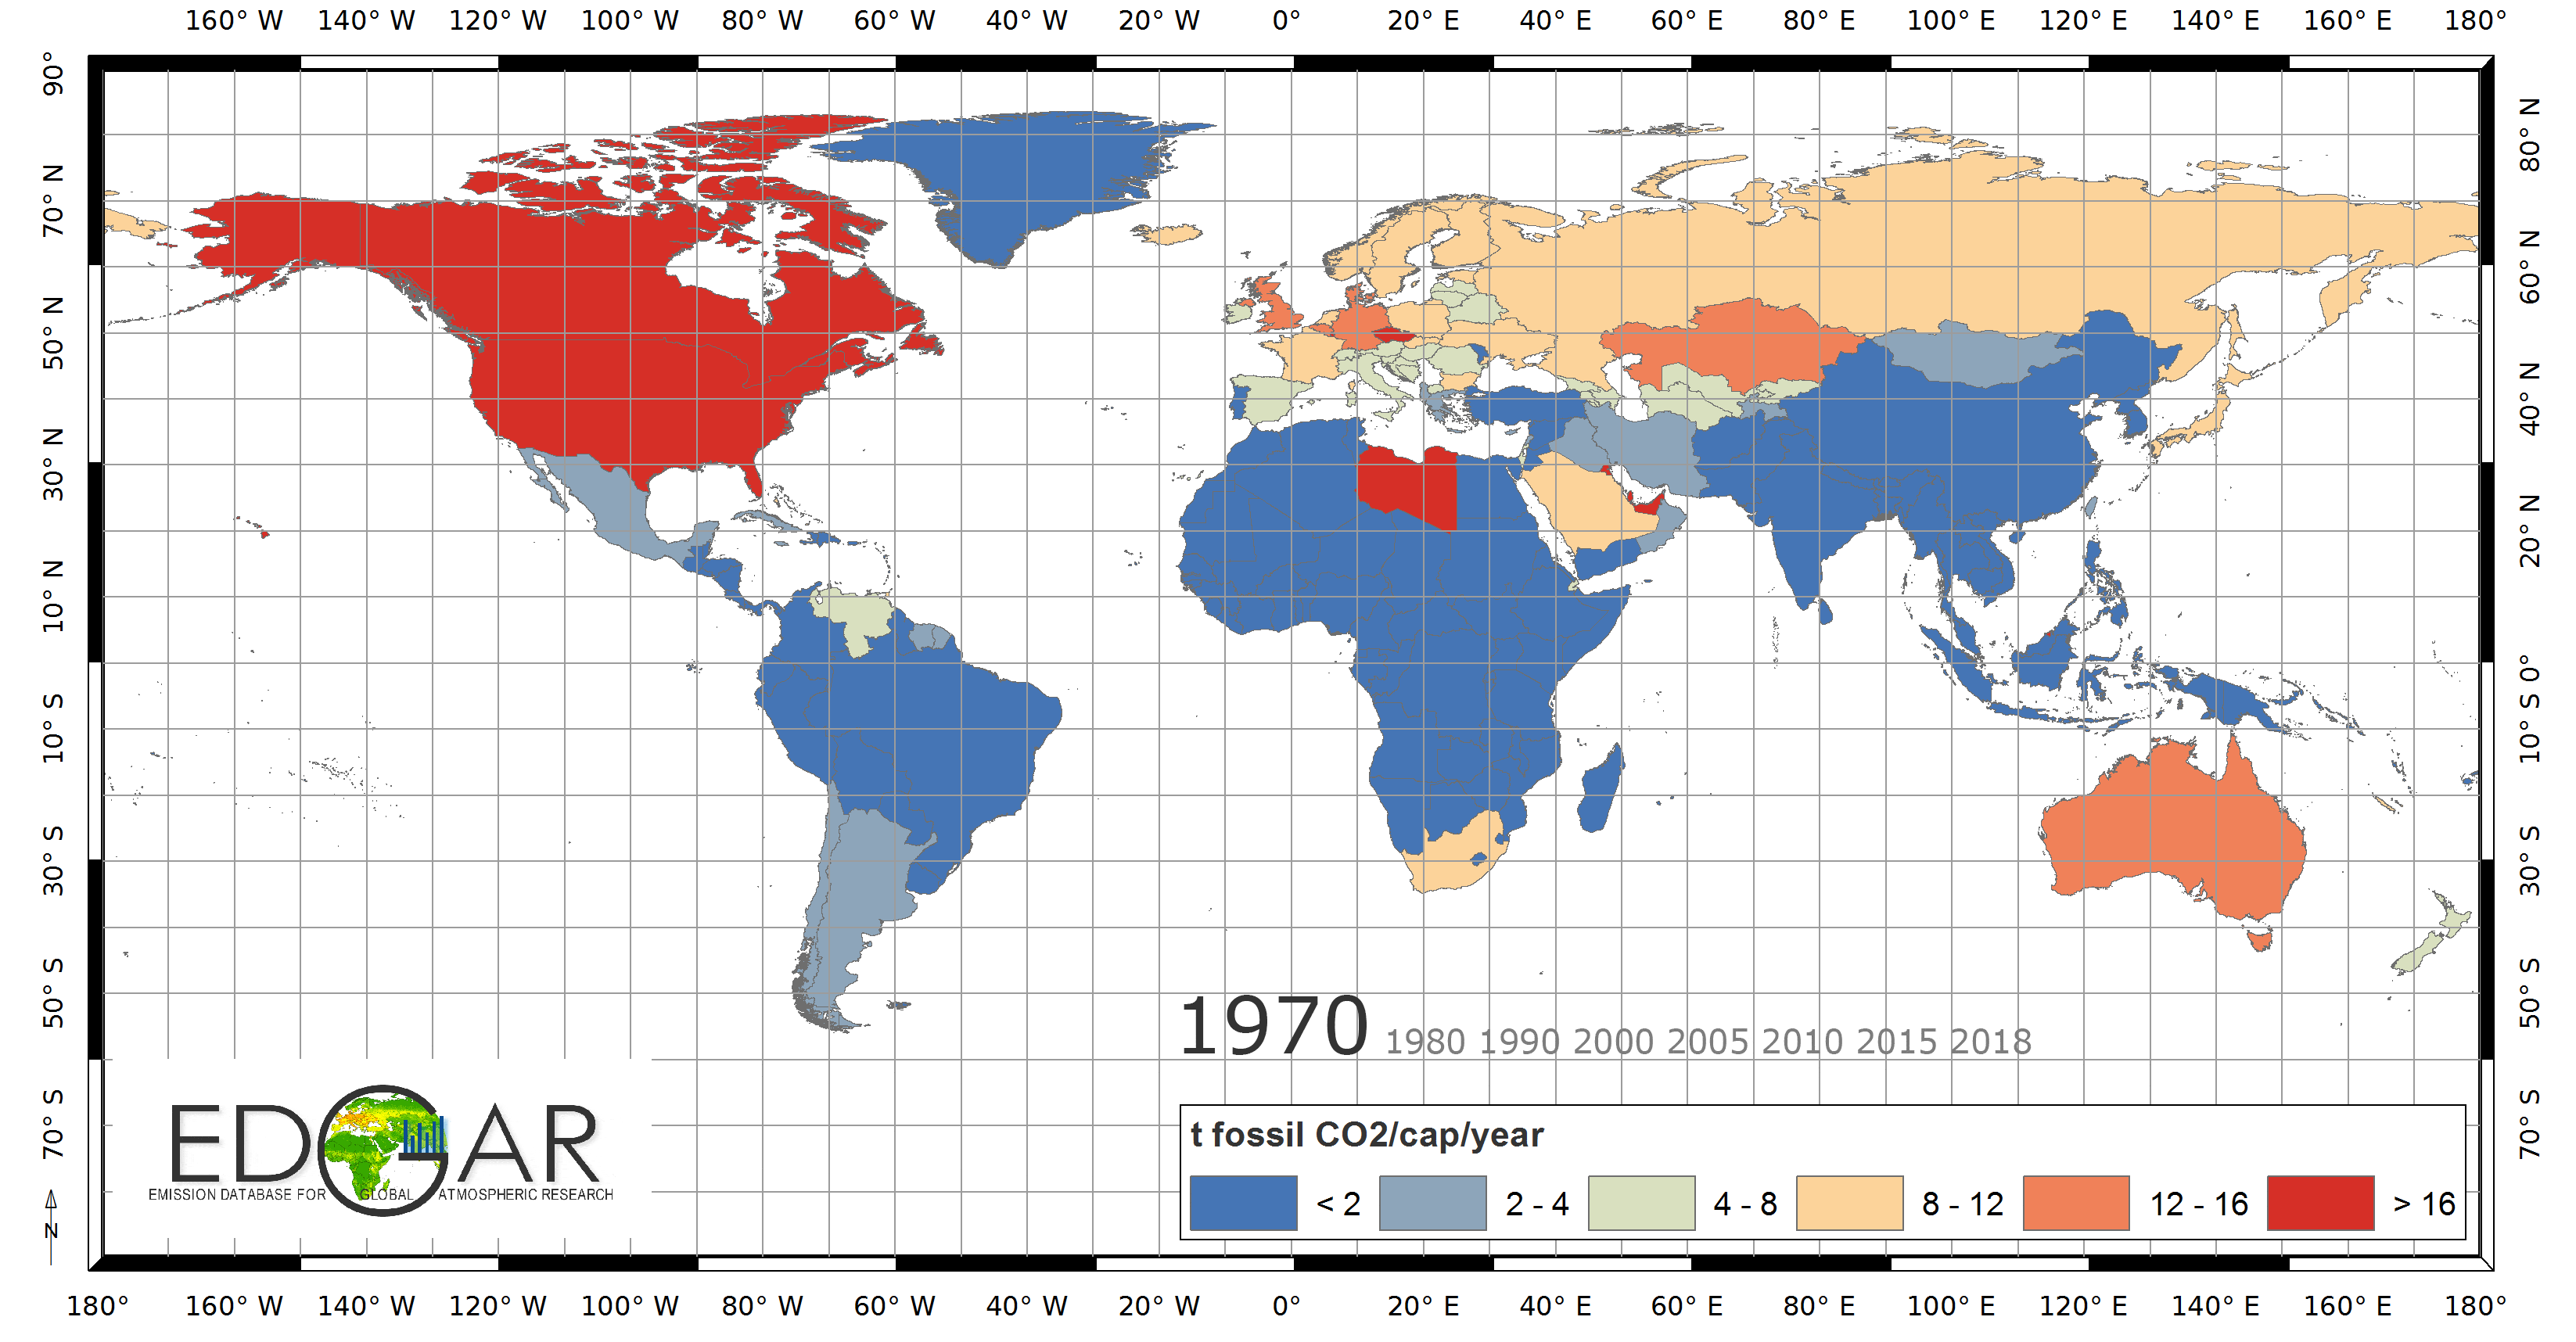 Fossil CO2 per capita emissions (1970 to 2019)